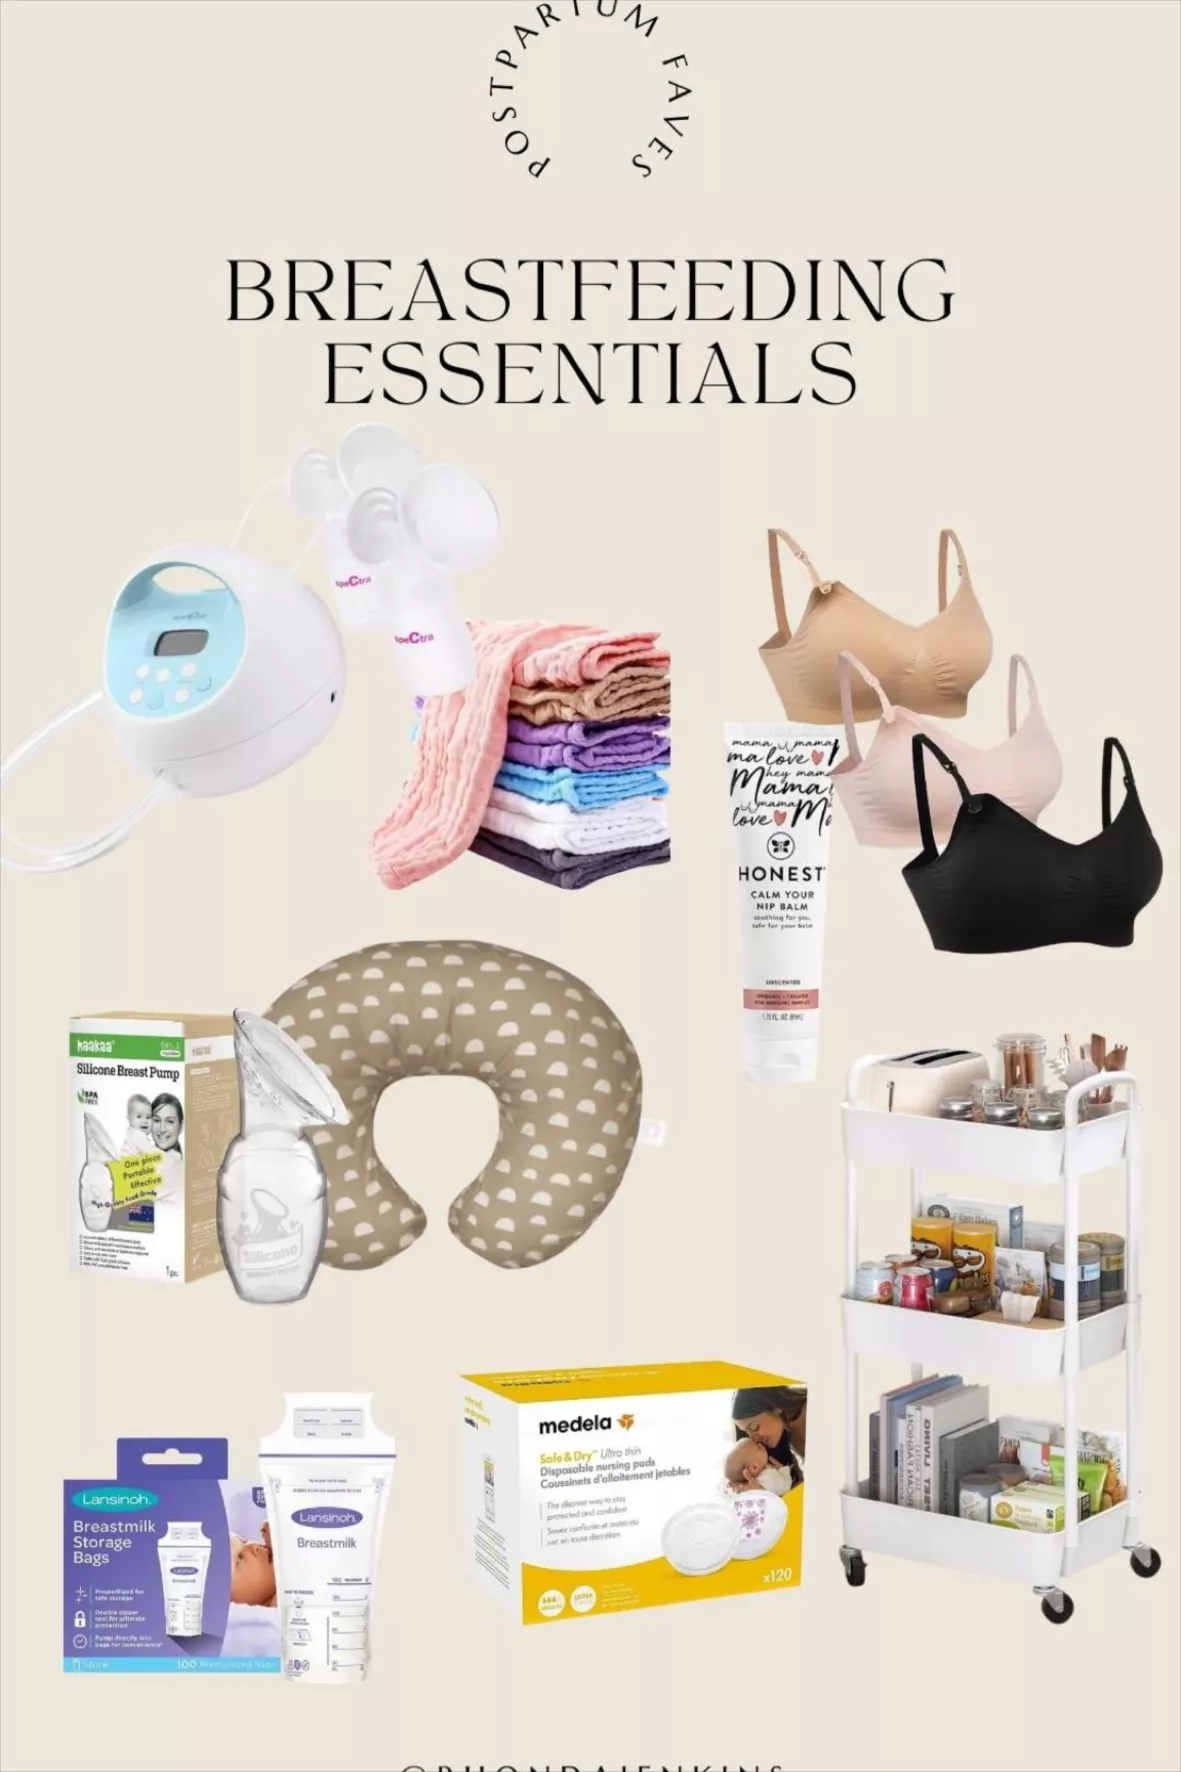 Breastfeeding Essentials – Lansinoh